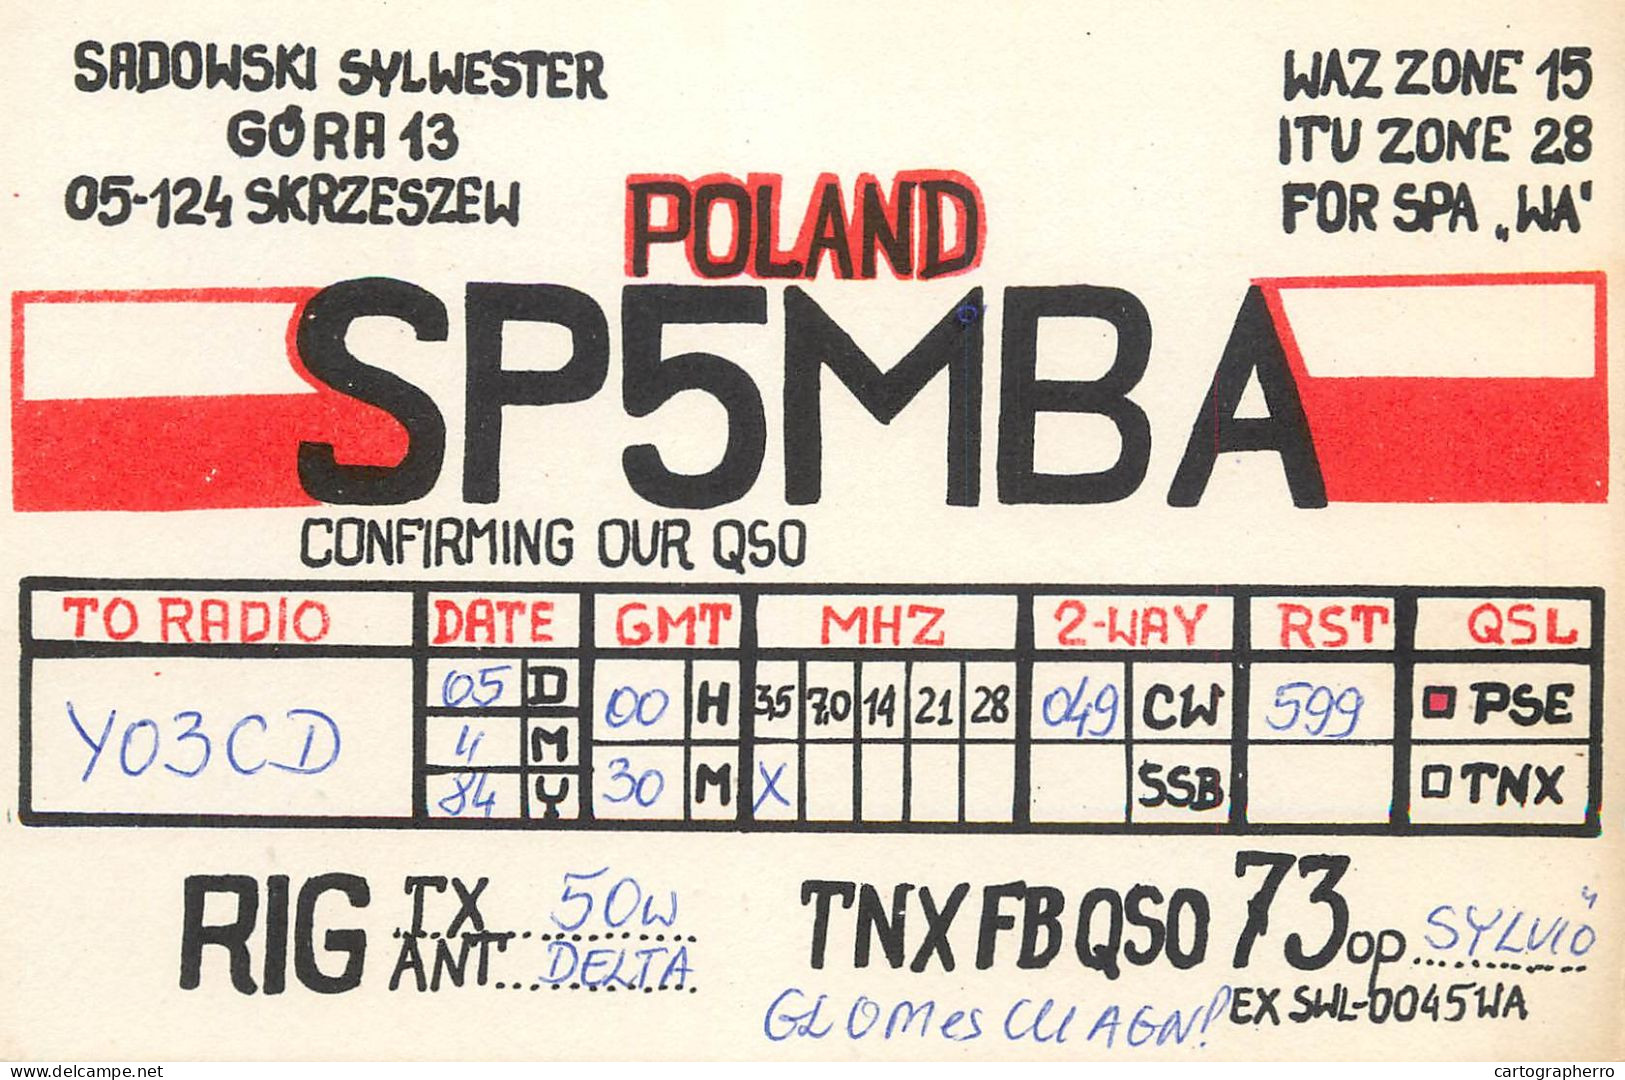 Polish Amateur Radio Station QSL Card Poland Y03CD SP5MBA - Radio Amateur